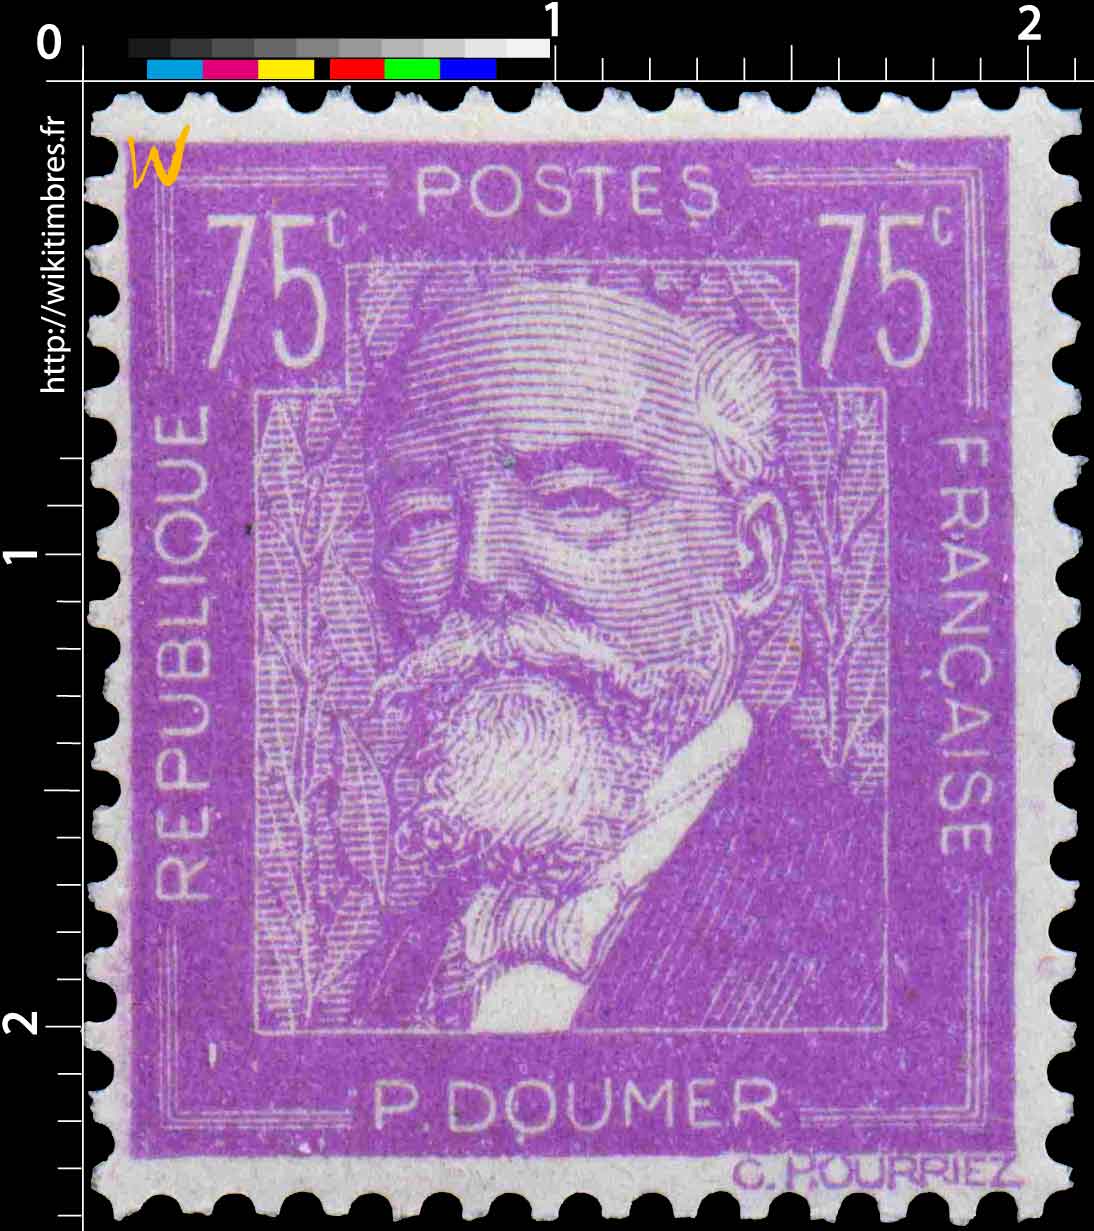 P. DOUMER